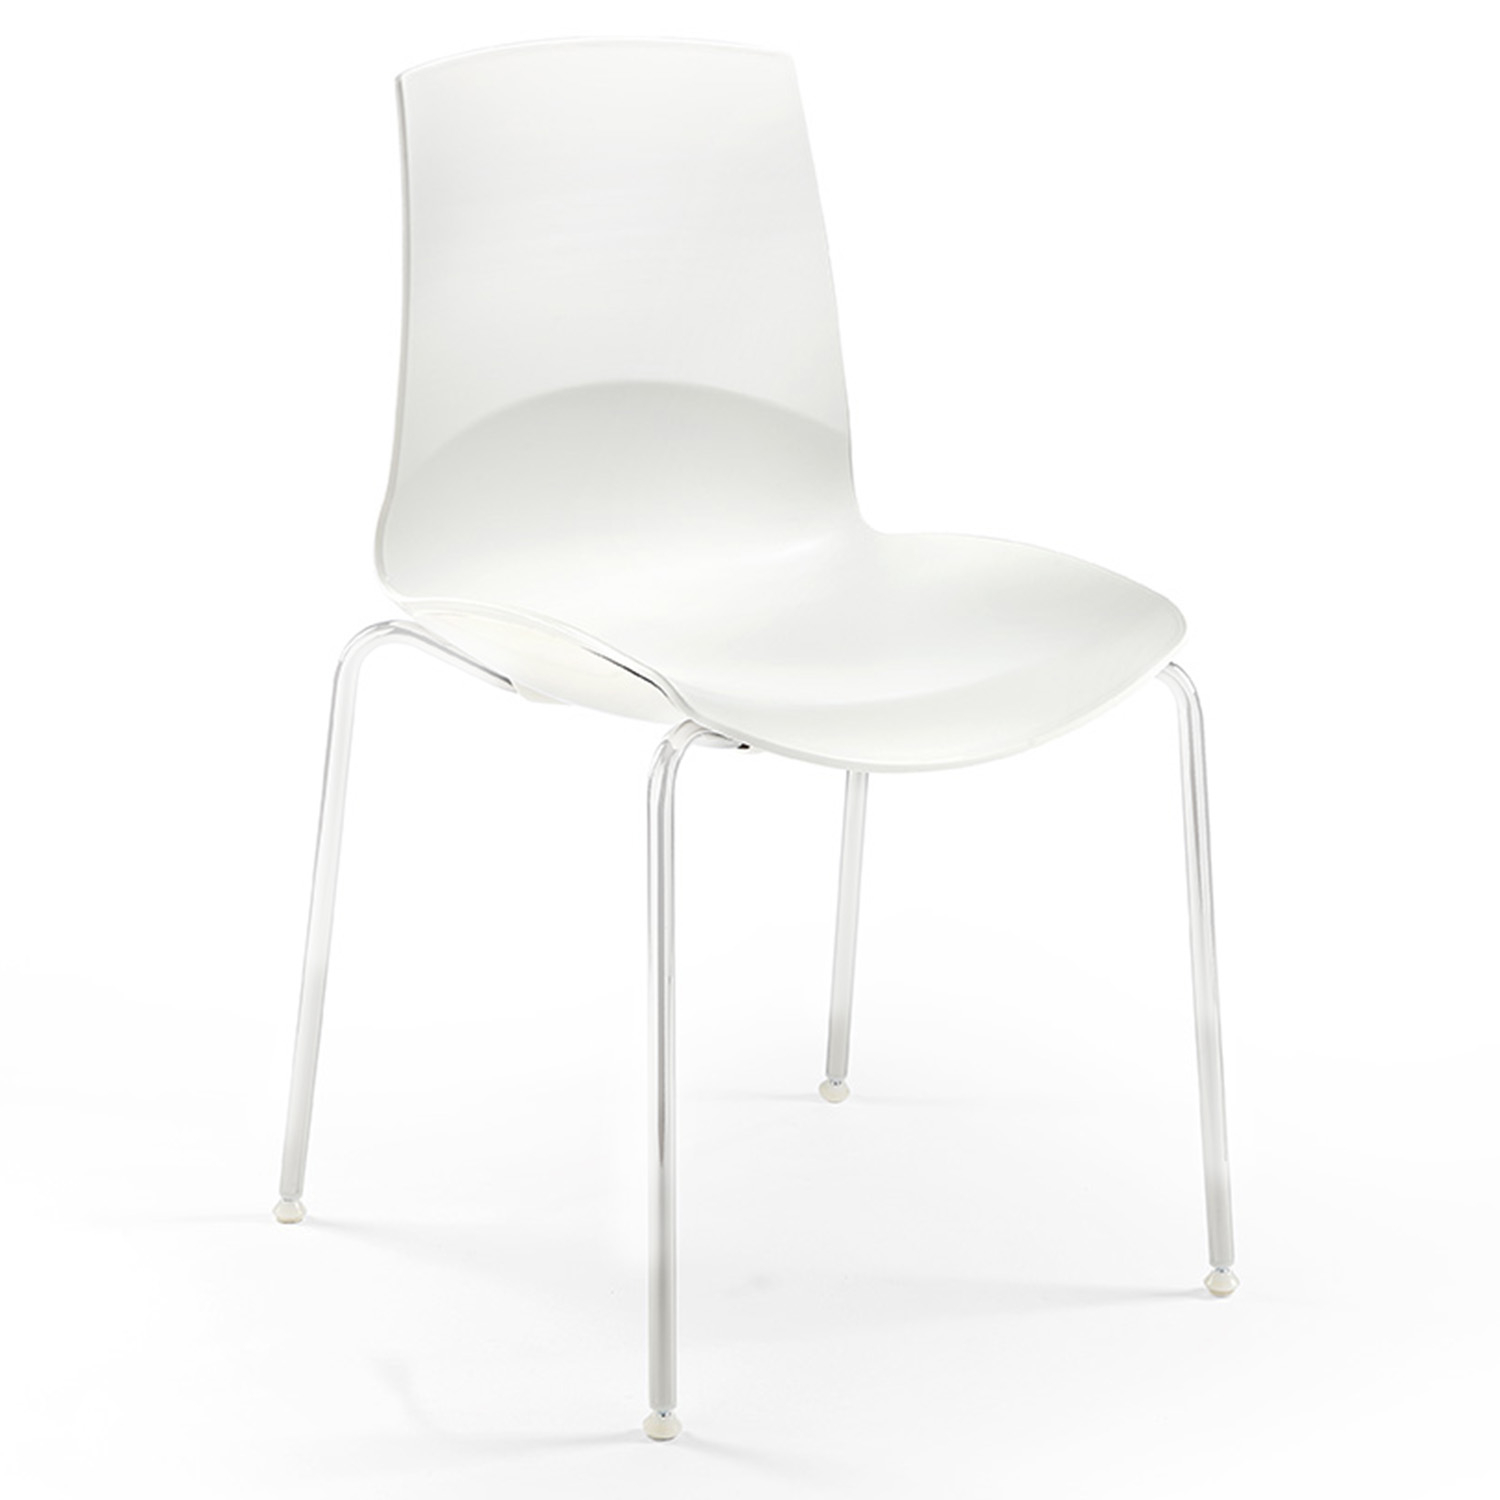 Výprodej Infiniti designové židle Now (bílý sedák/ ocel lakovaná bílá)